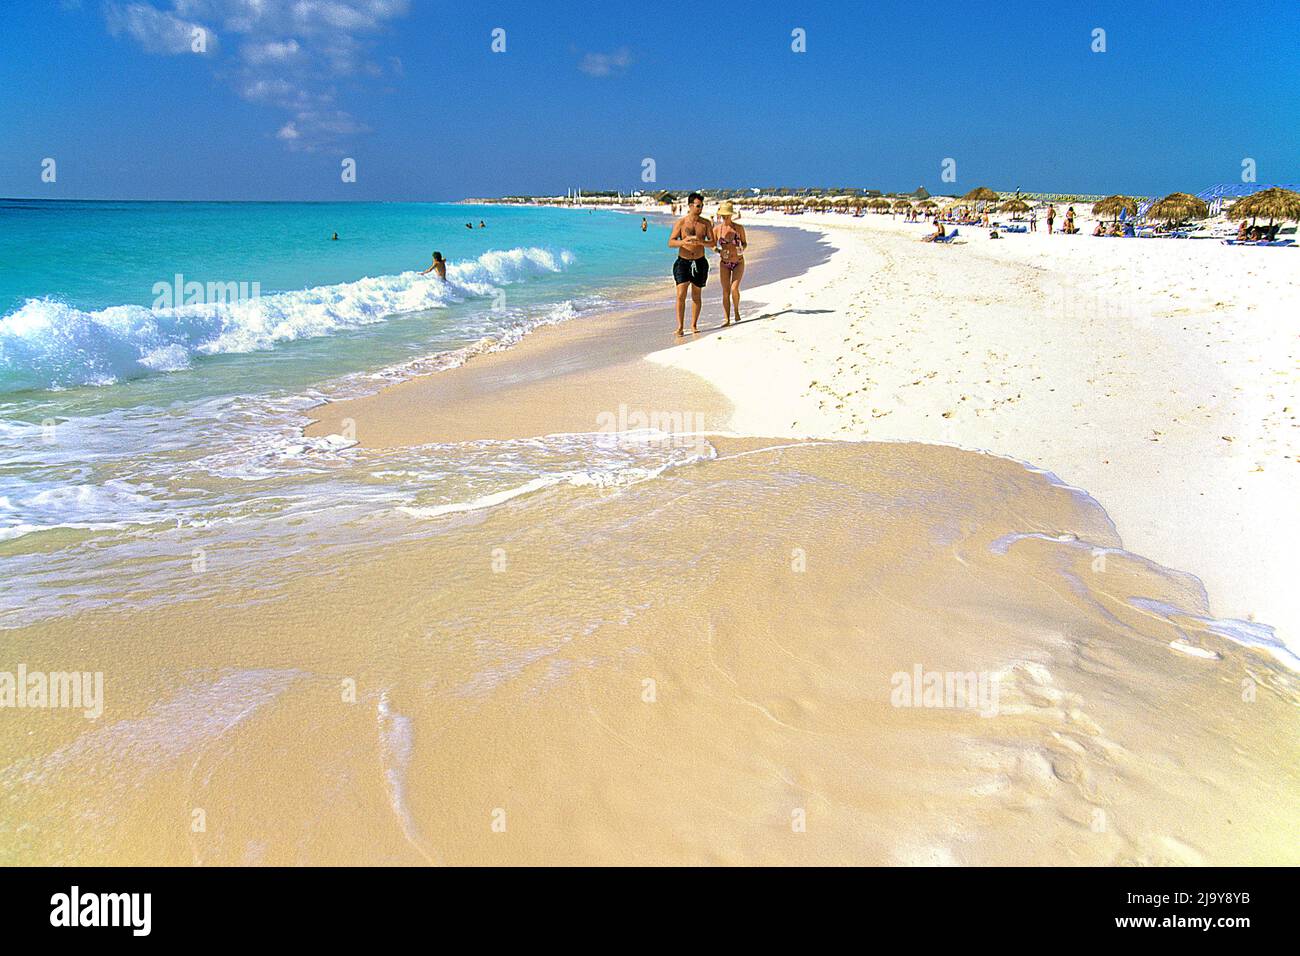 Strandleben bei Cayo Largo, Kuba, Karibik | Beachlife at Cayo Largo, Cuba, Caraibi Foto Stock